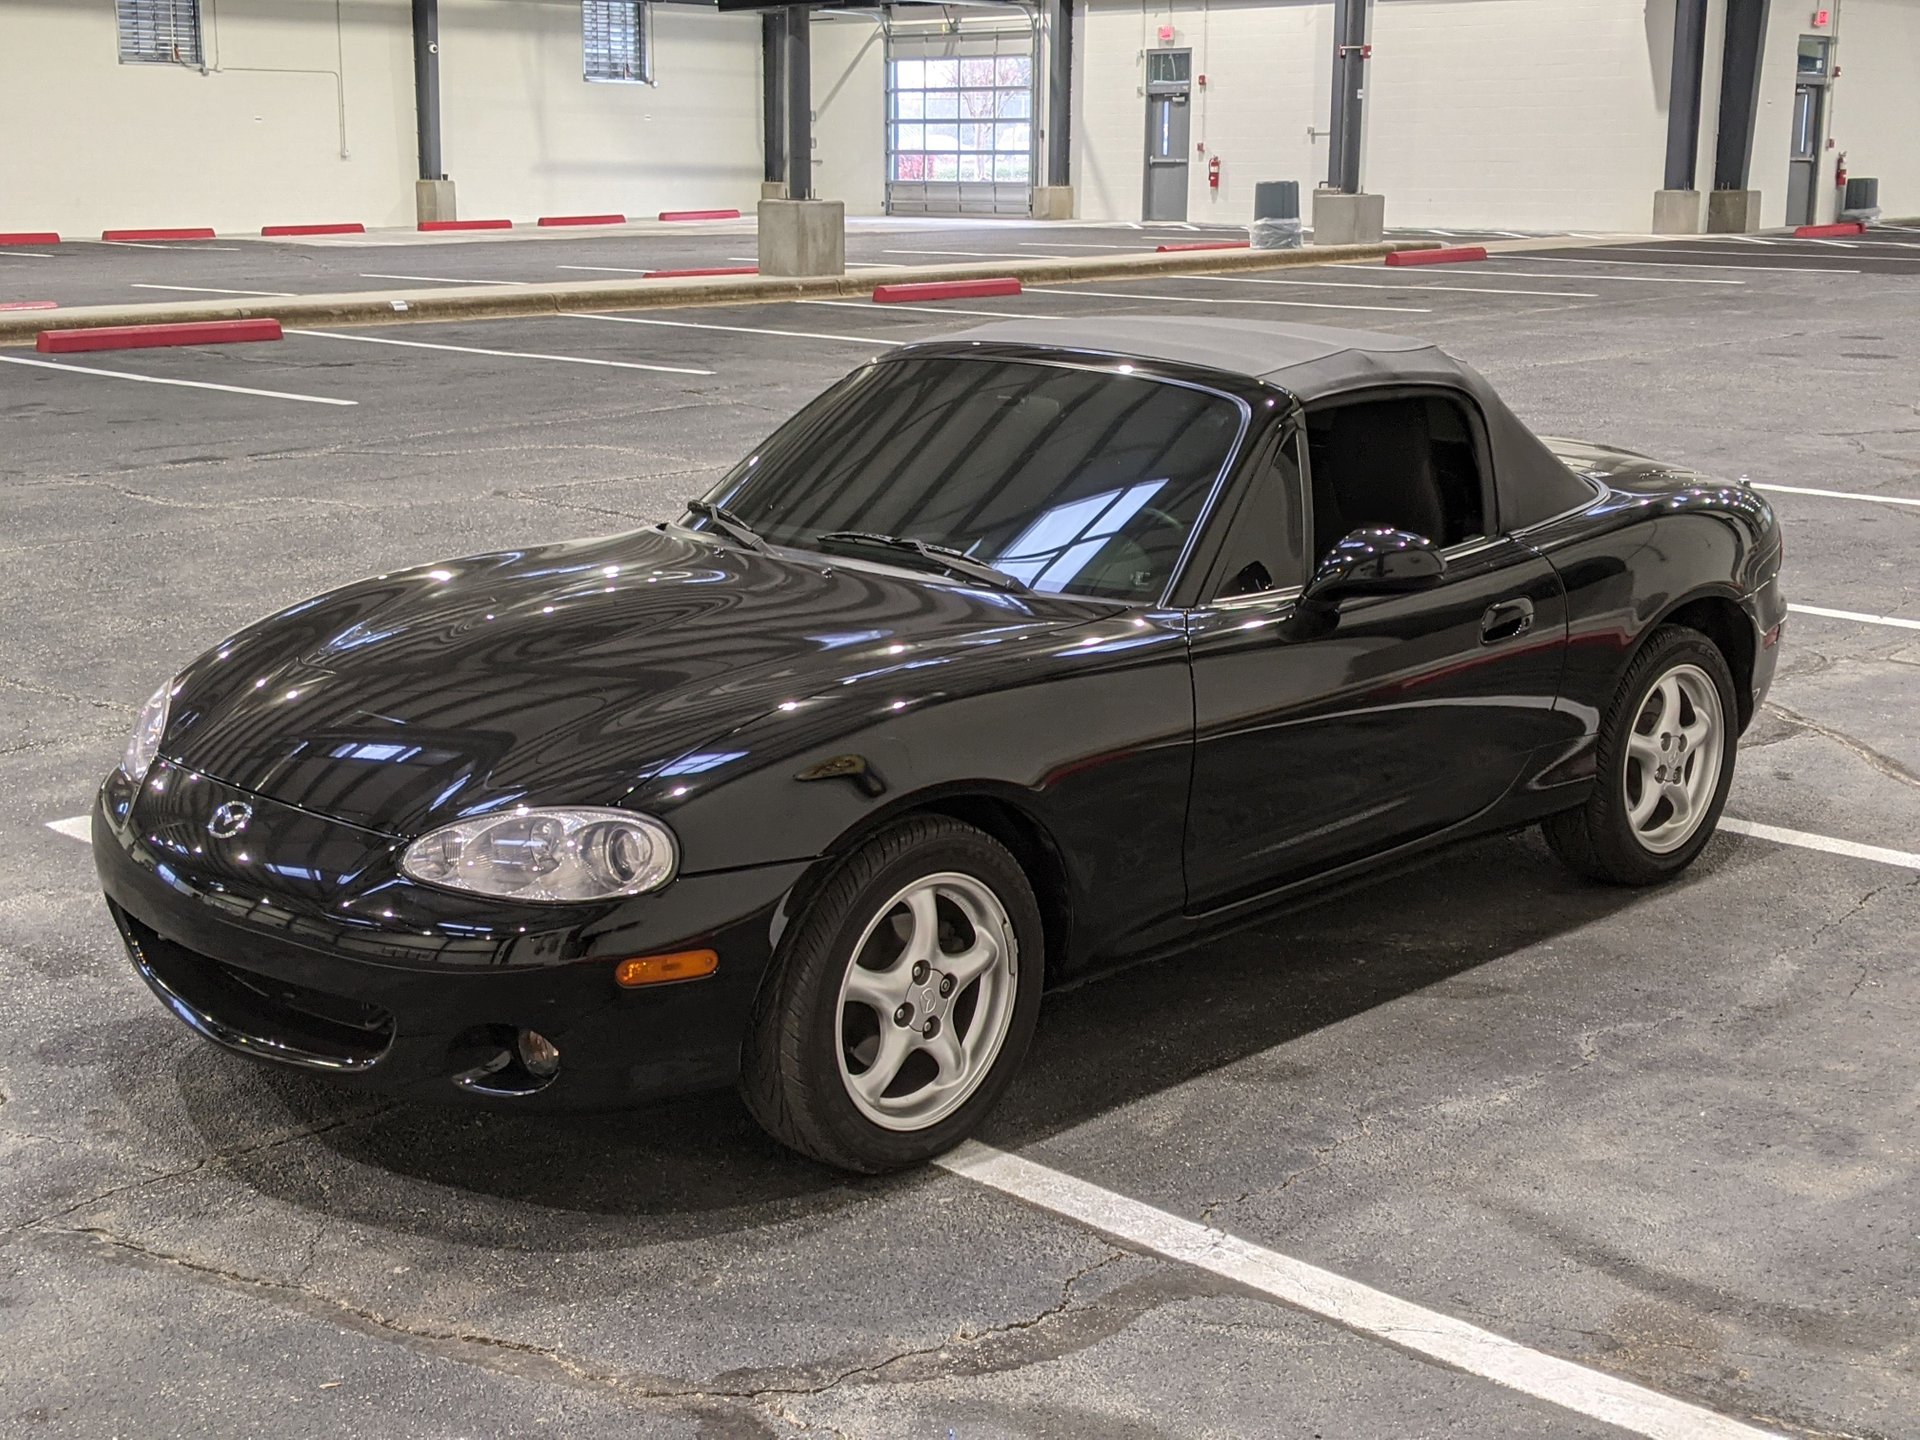 2002 Mazda Miata | GAA Classic Cars